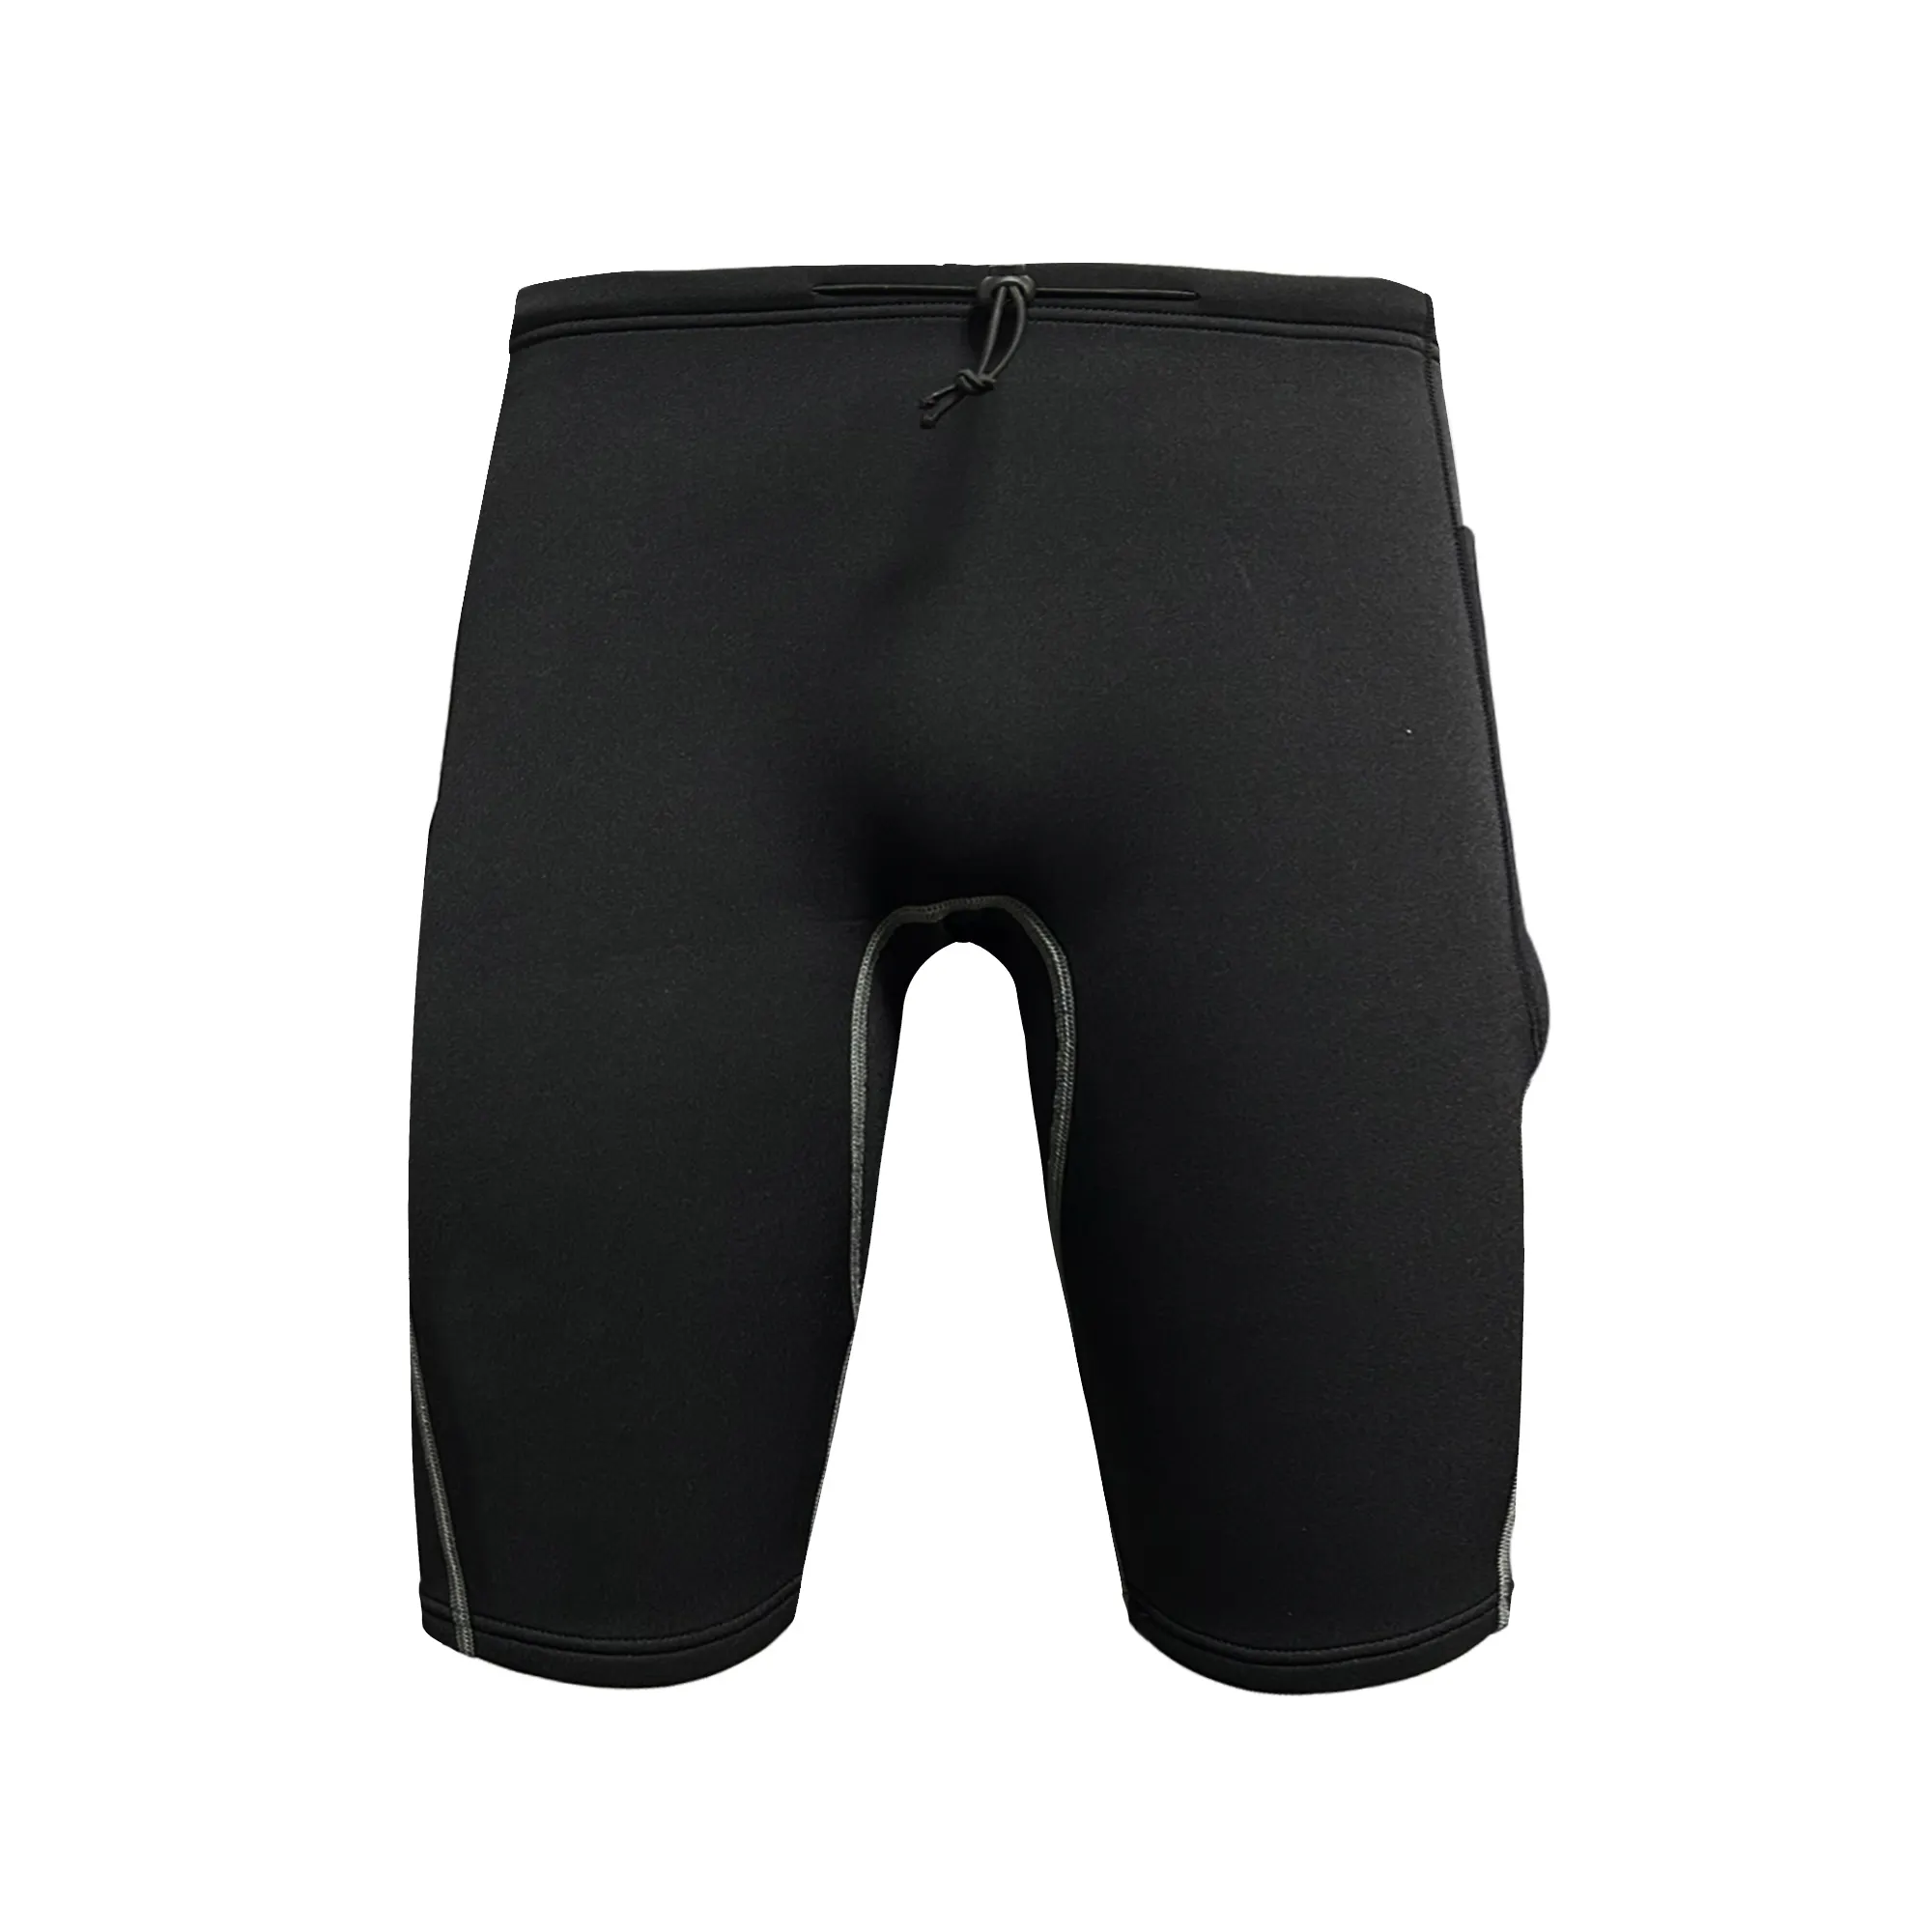 2एमएम कंप्रेशन सर्फिंग वेटसूट पैंट शॉर्ट पैंट नियोप्रीन स्विमवीयर डाइविंग शॉर्ट्स